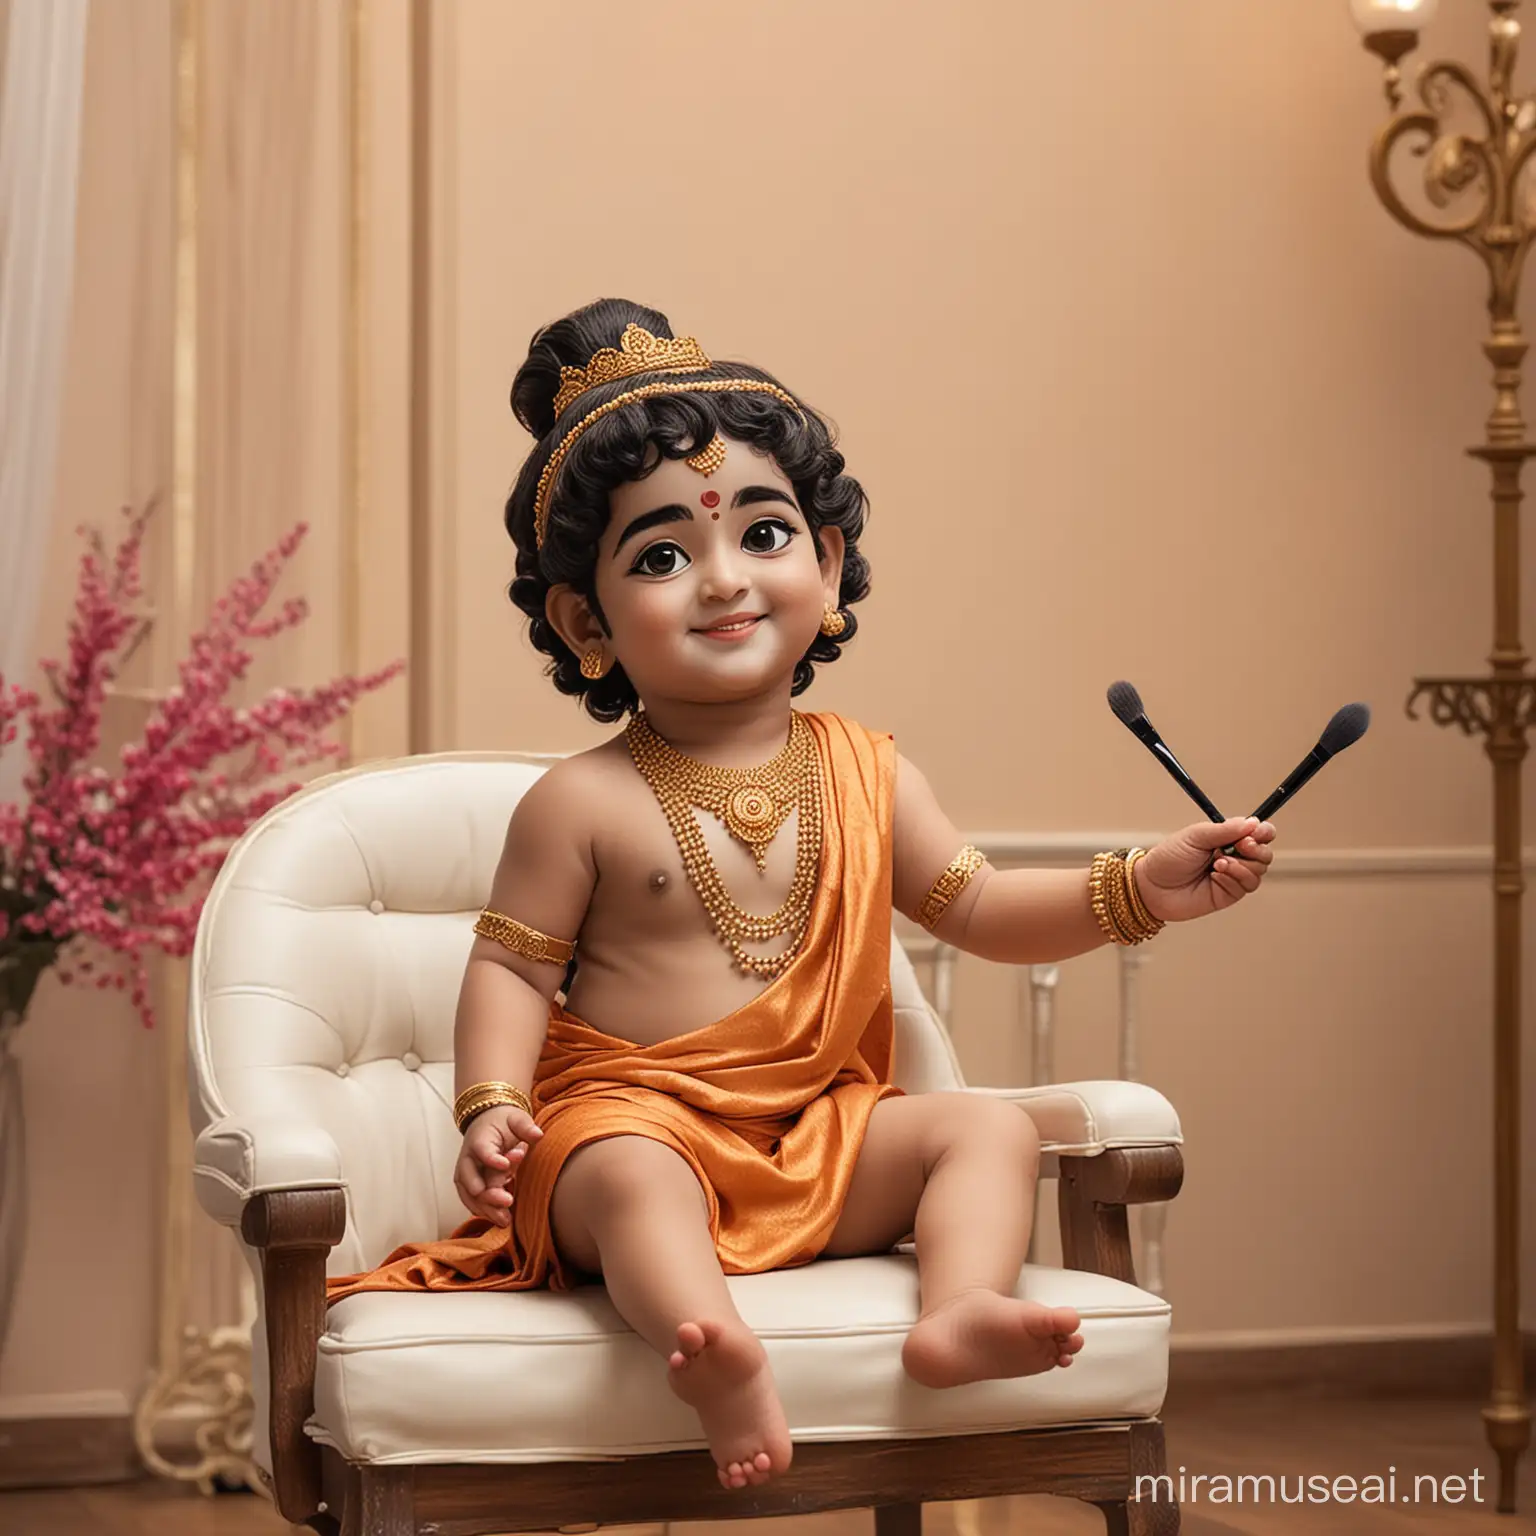 Little Krishna Makeup Salon Adorable Lord Krishna Sitting on a Salon Chair with a Makeup Brush